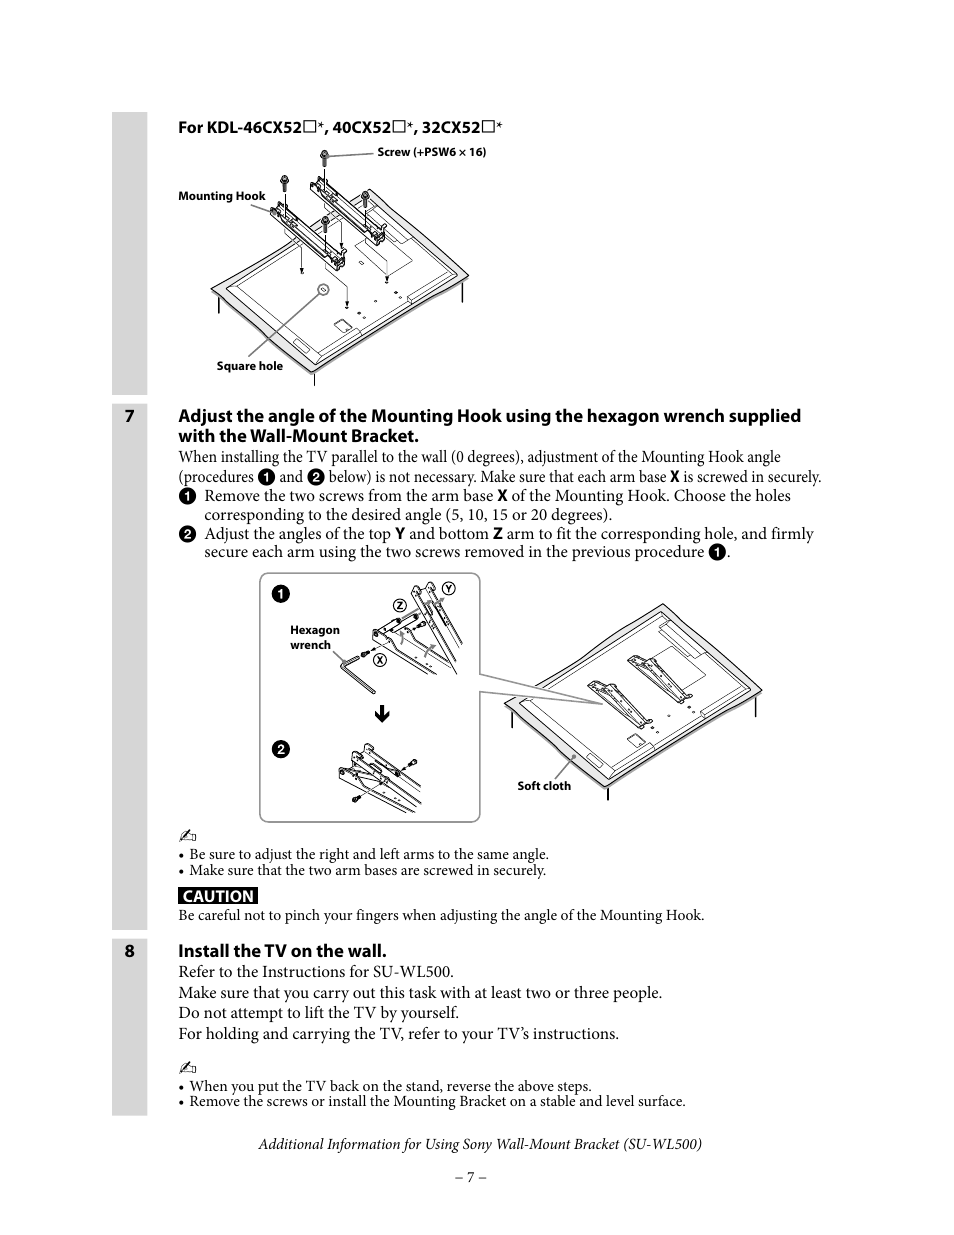 Sony SU-WL500 User Manual | Page 7 / 7 | Original mode